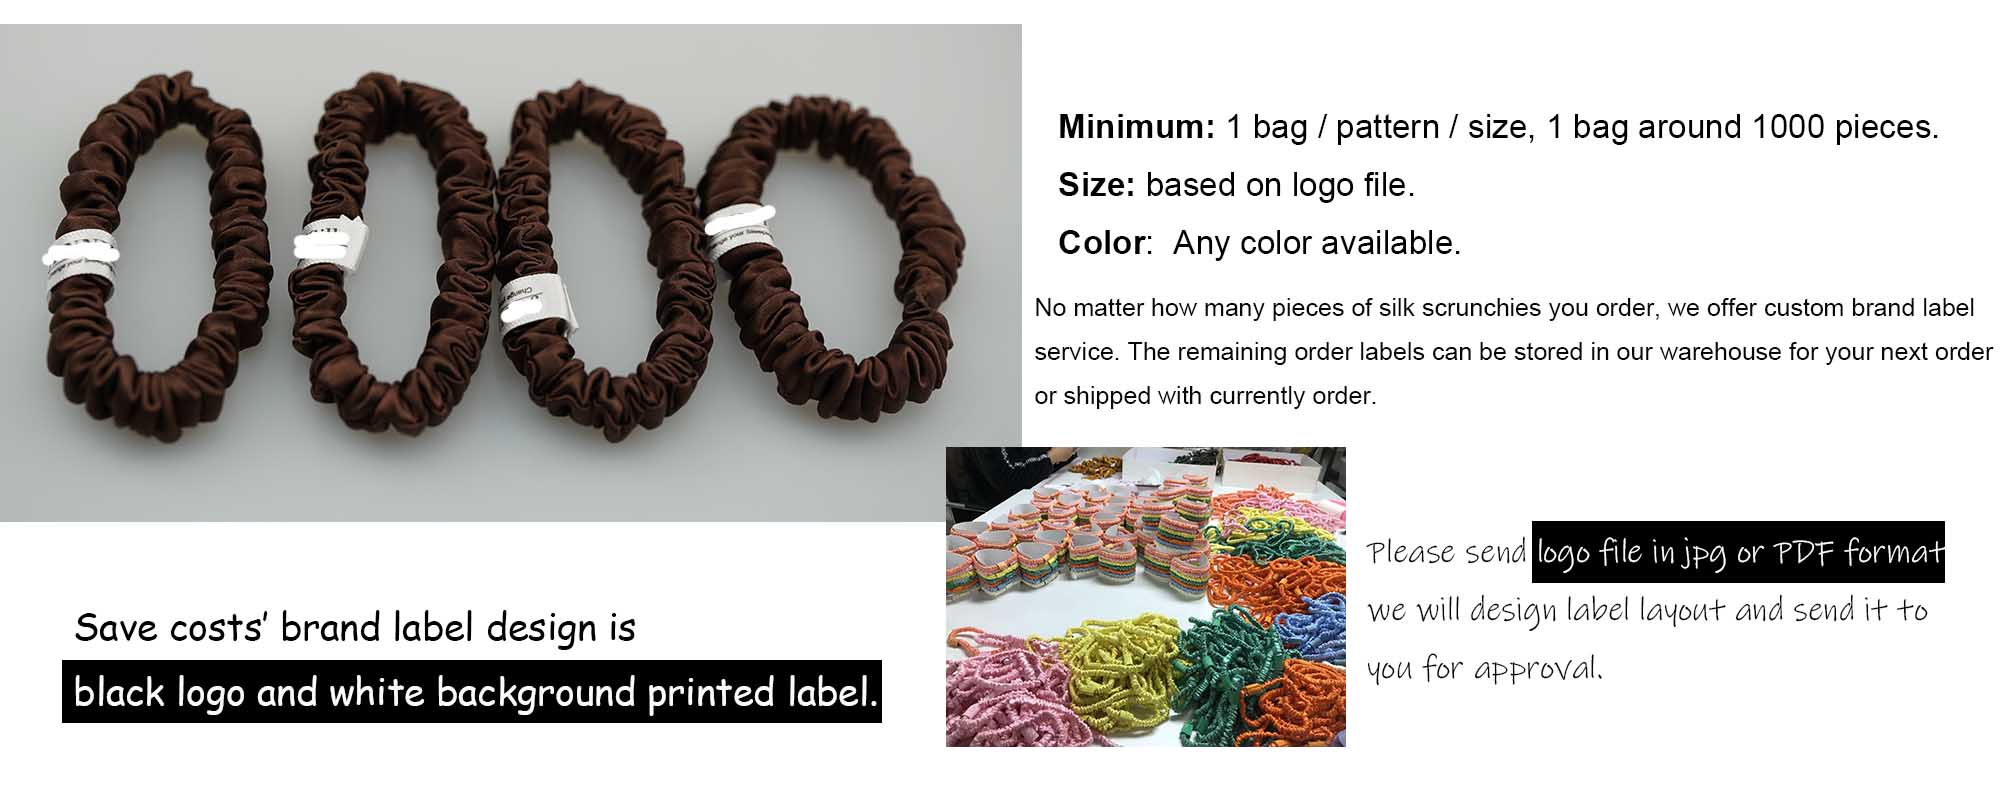 custom brand label on silk scrunchies